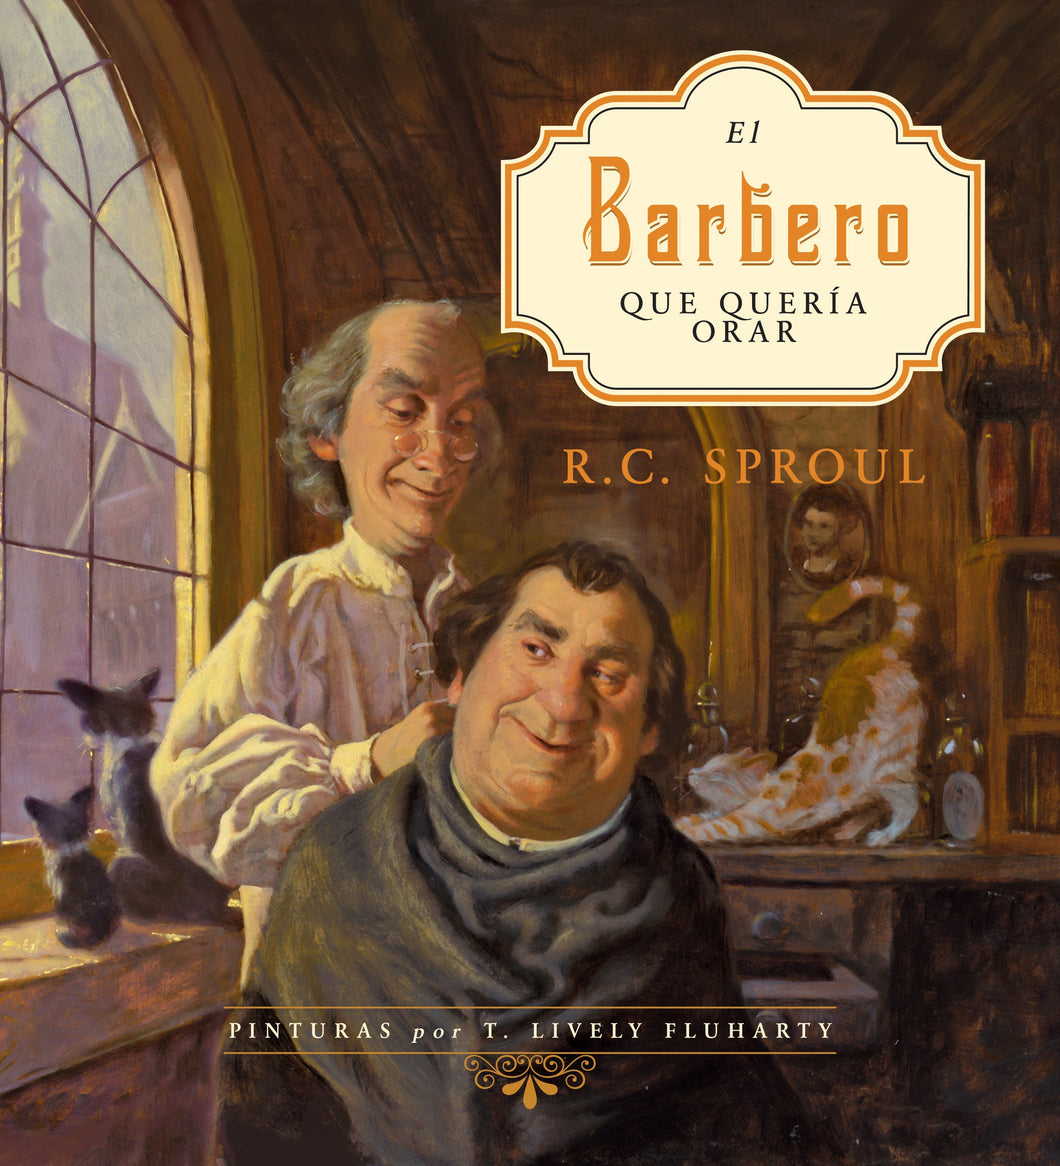 Spanish-The Barber Who Wanted To Pray (El barbero que queria orar)